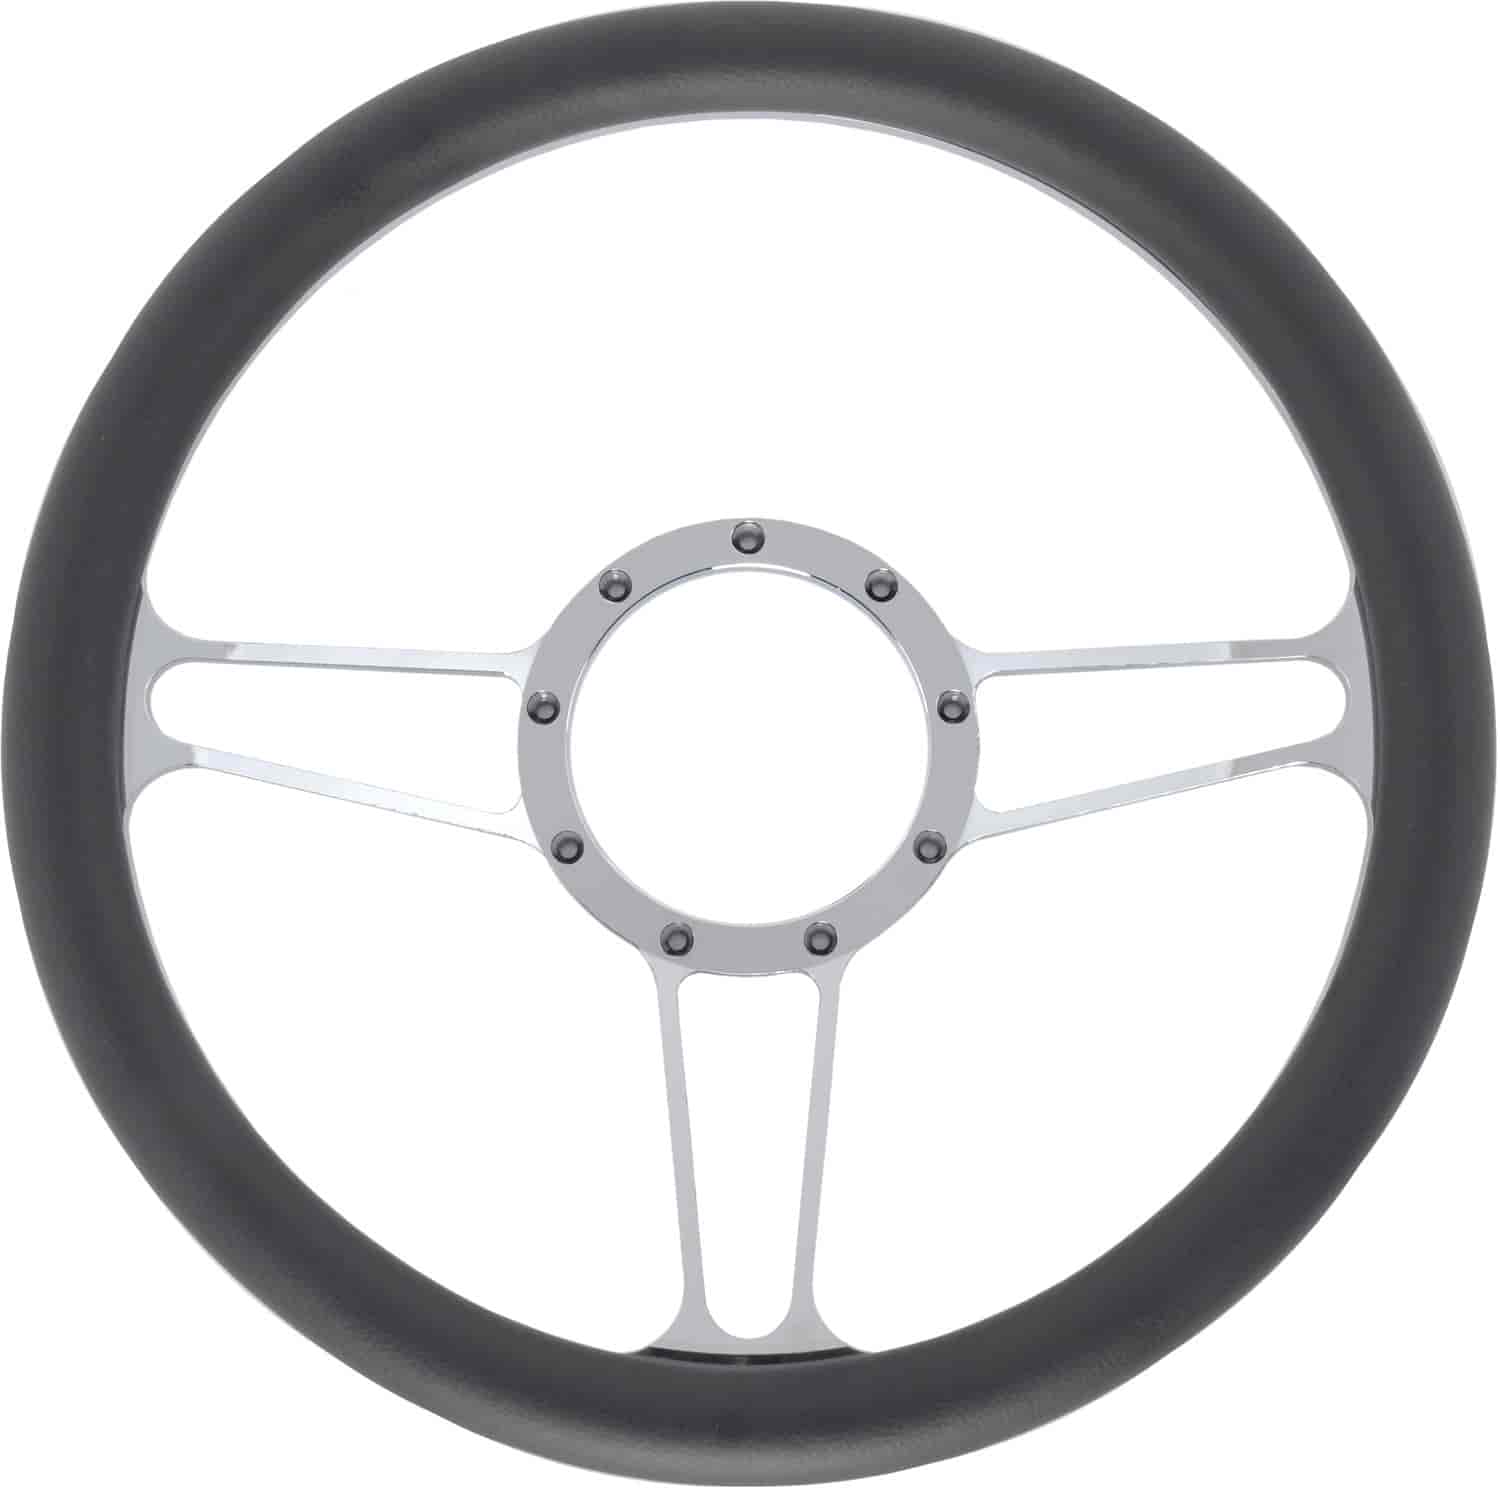 Chrome-Plated Billet Aluminum 14 in. Steering Wheel [Vintage Spoke Design]